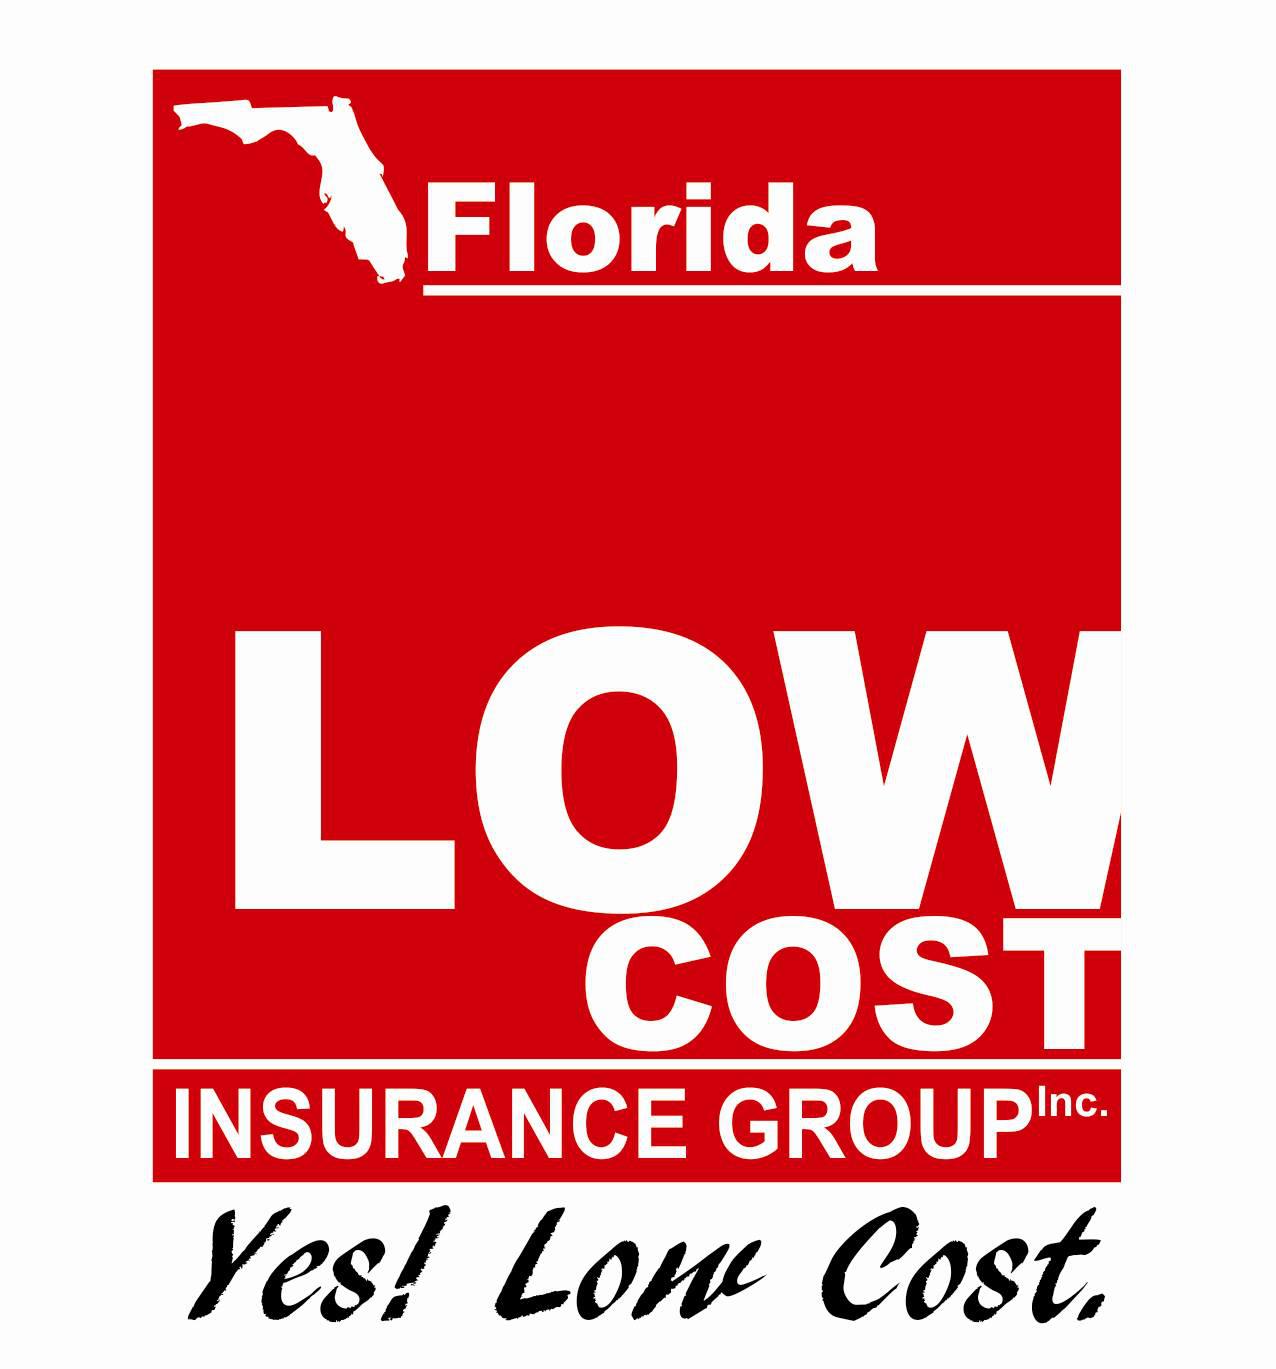 FL Low Cost Insurance Photo